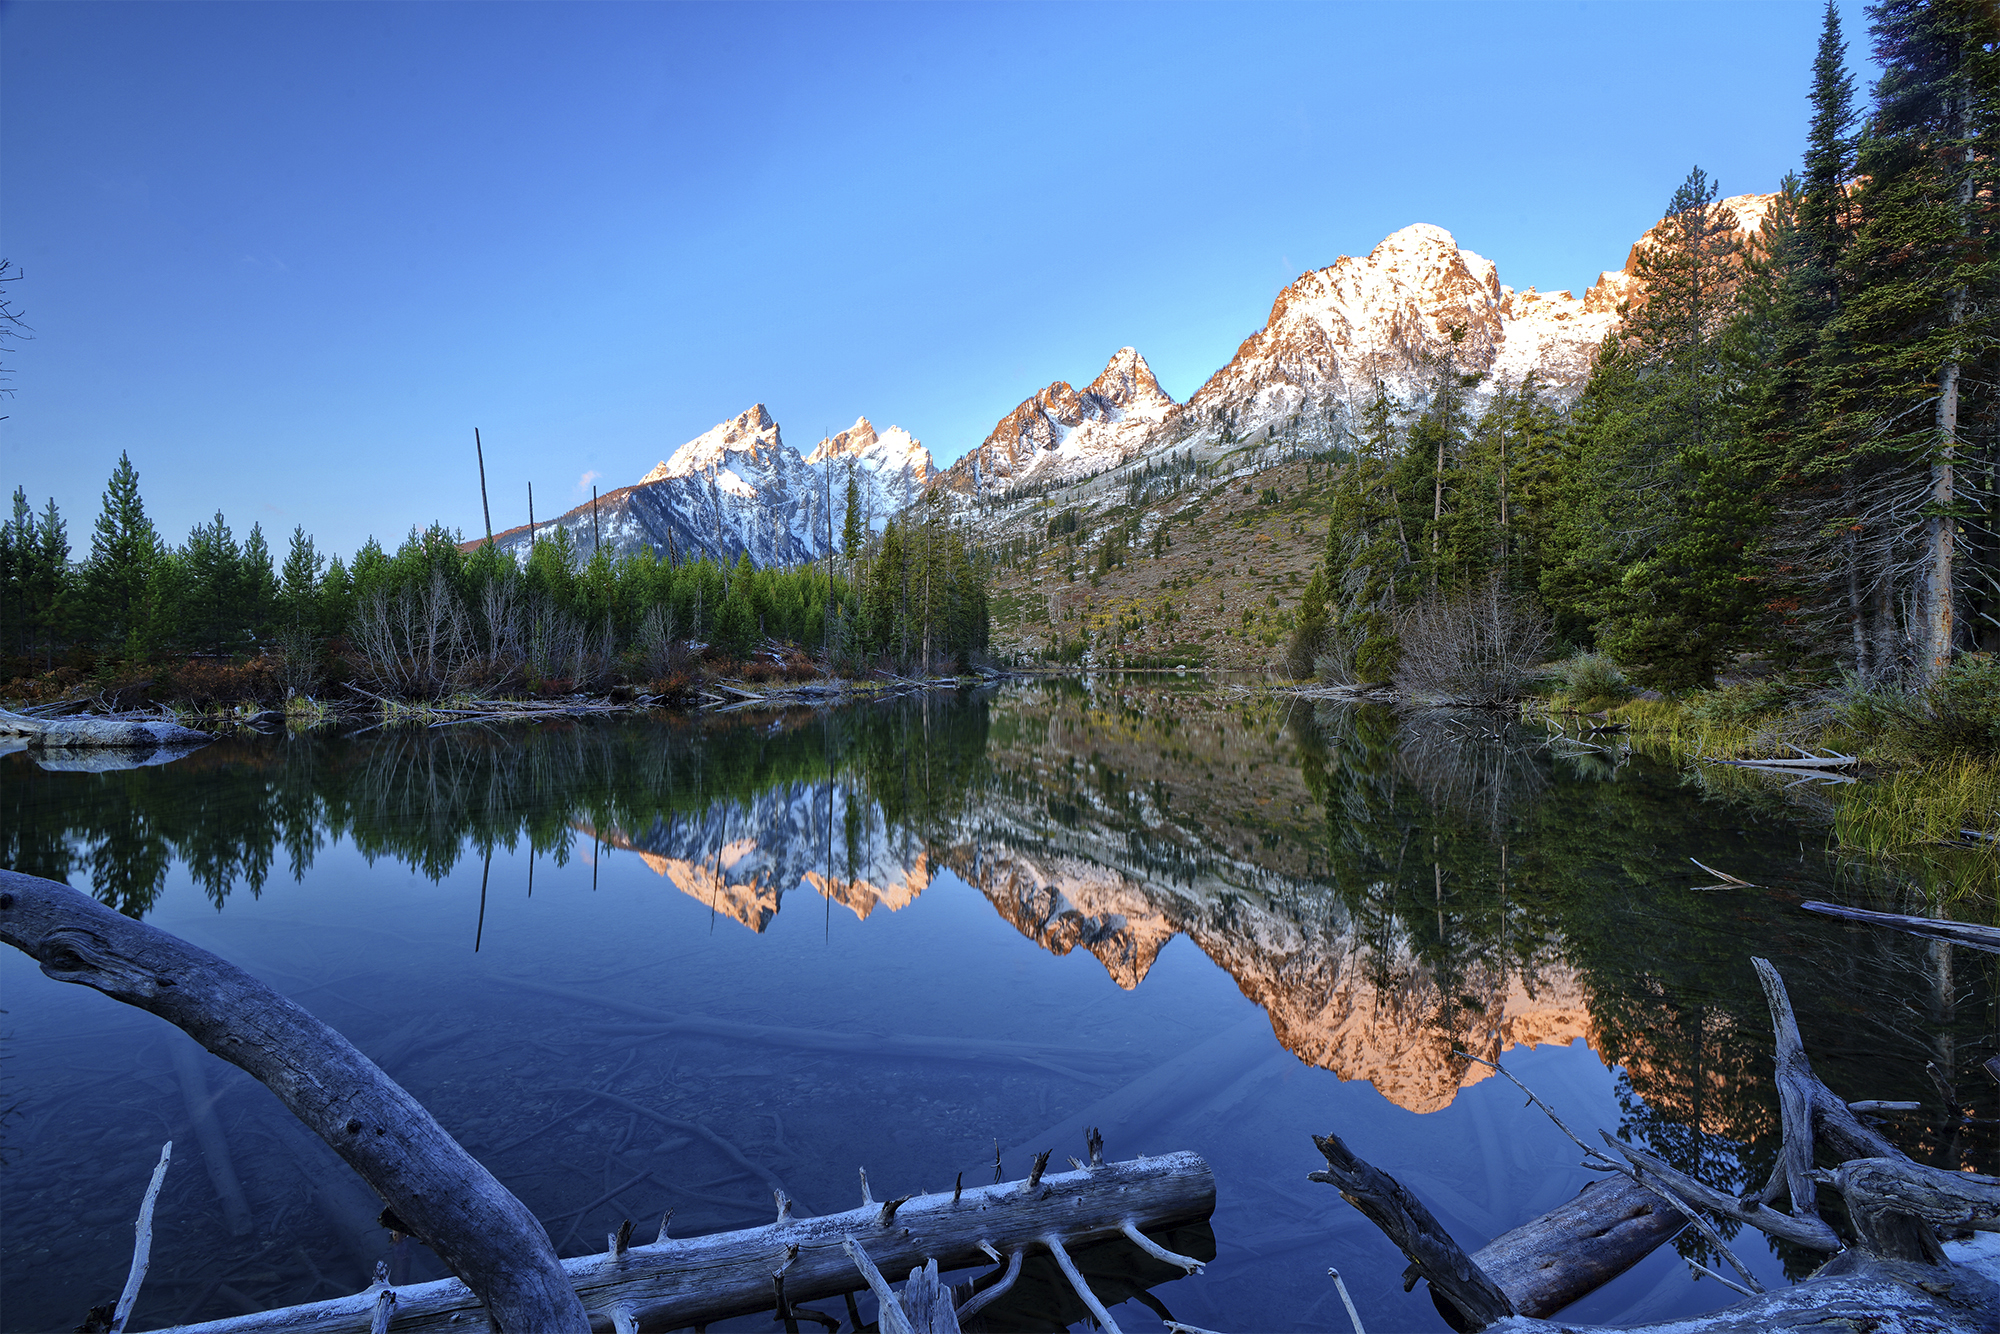 Jenny Lake Reflection